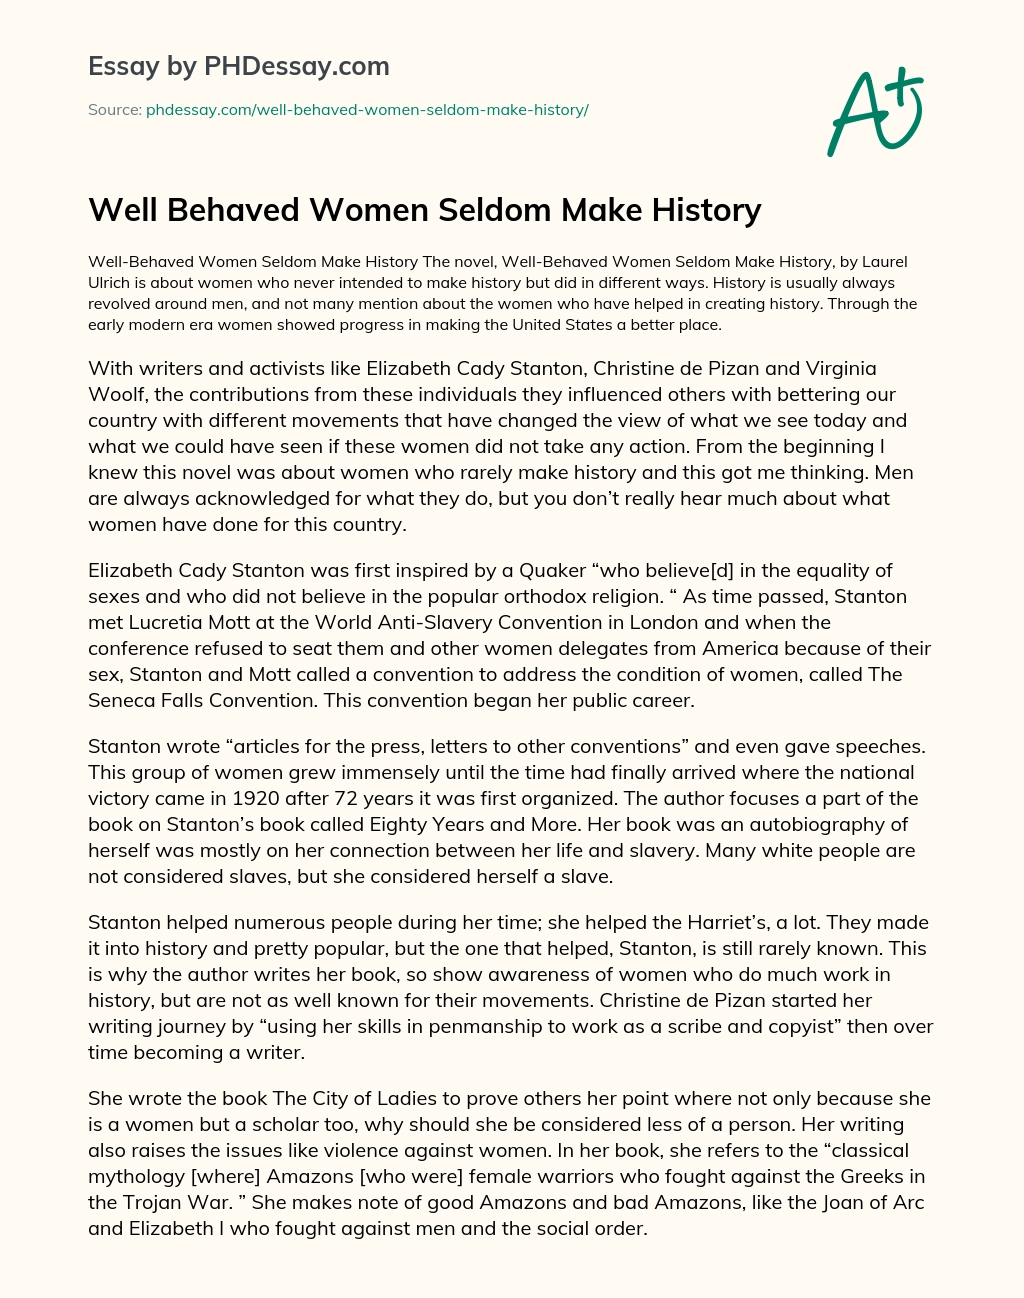 Well Behaved Women Seldom Make History essay